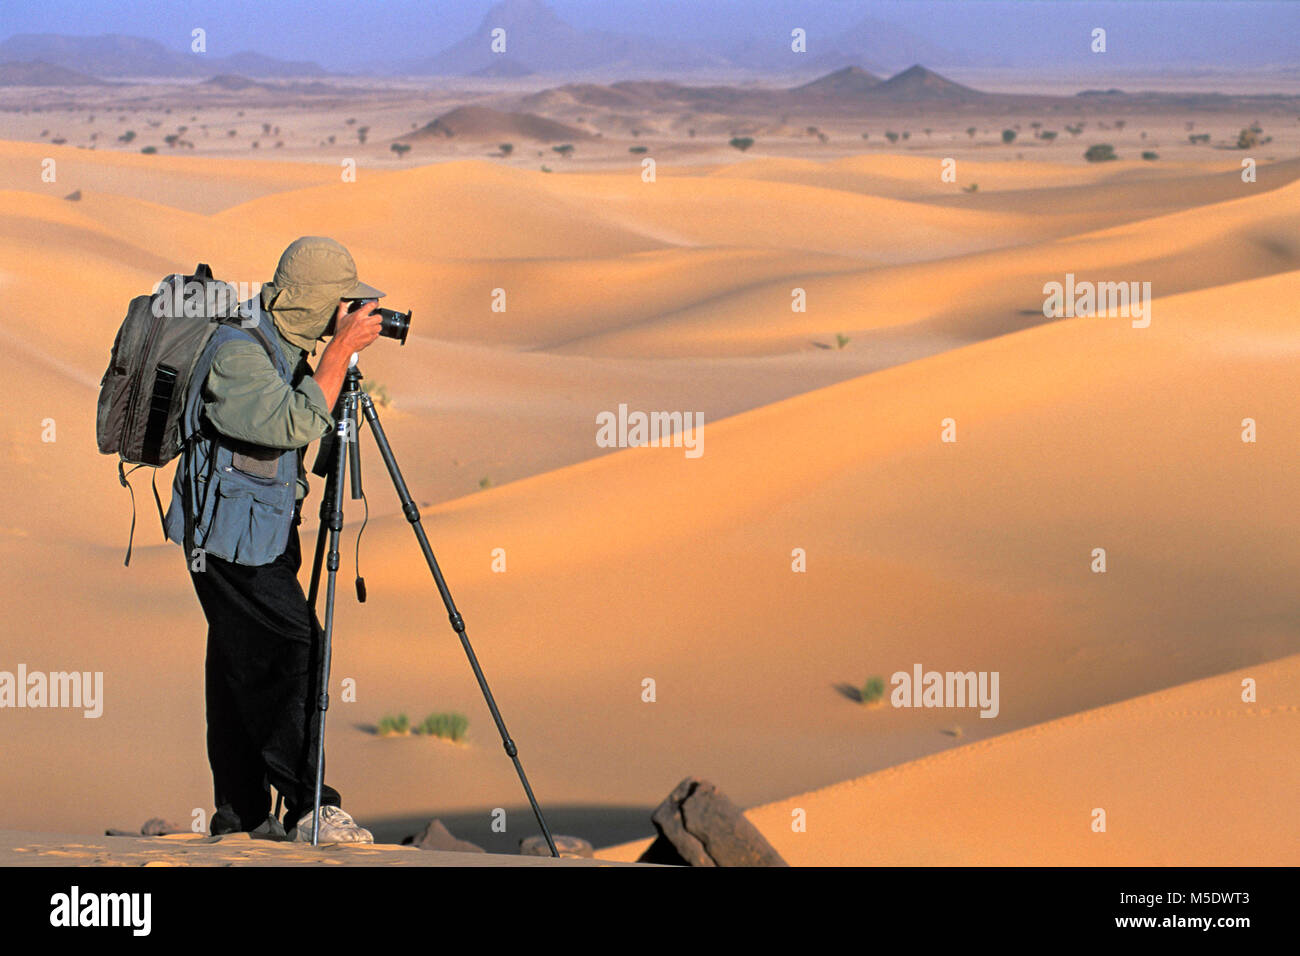 Niger. Agadez. Deserto del Sahara. Il Sahel. Deserto Tenerè. Le dune di sabbia di Temet. Fotografo Frans Lemmens. Il turista. Unesco World Heritage Site. Foto Stock